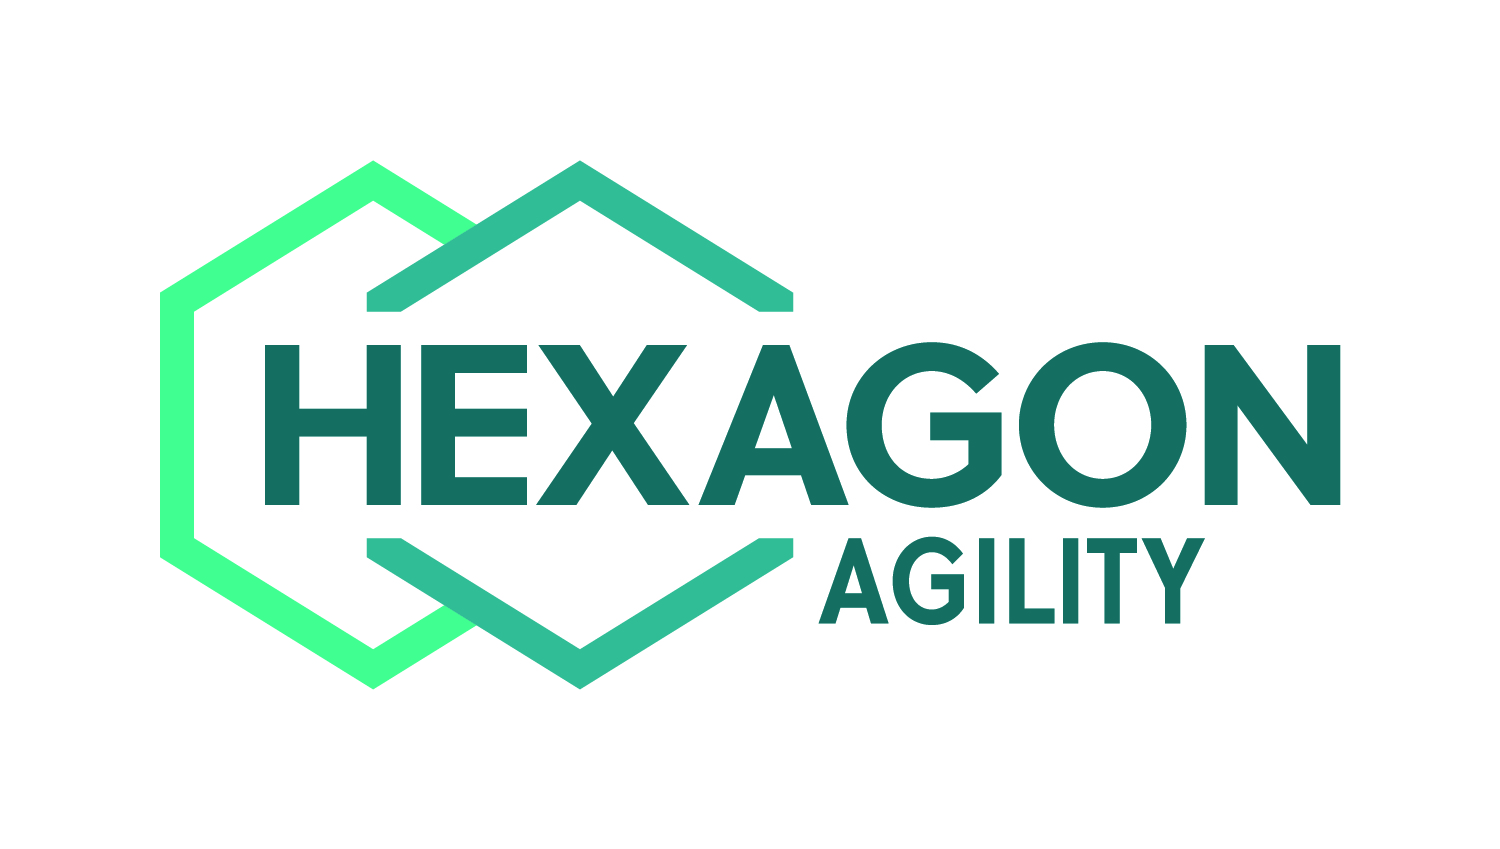 Hexagon Agility and 